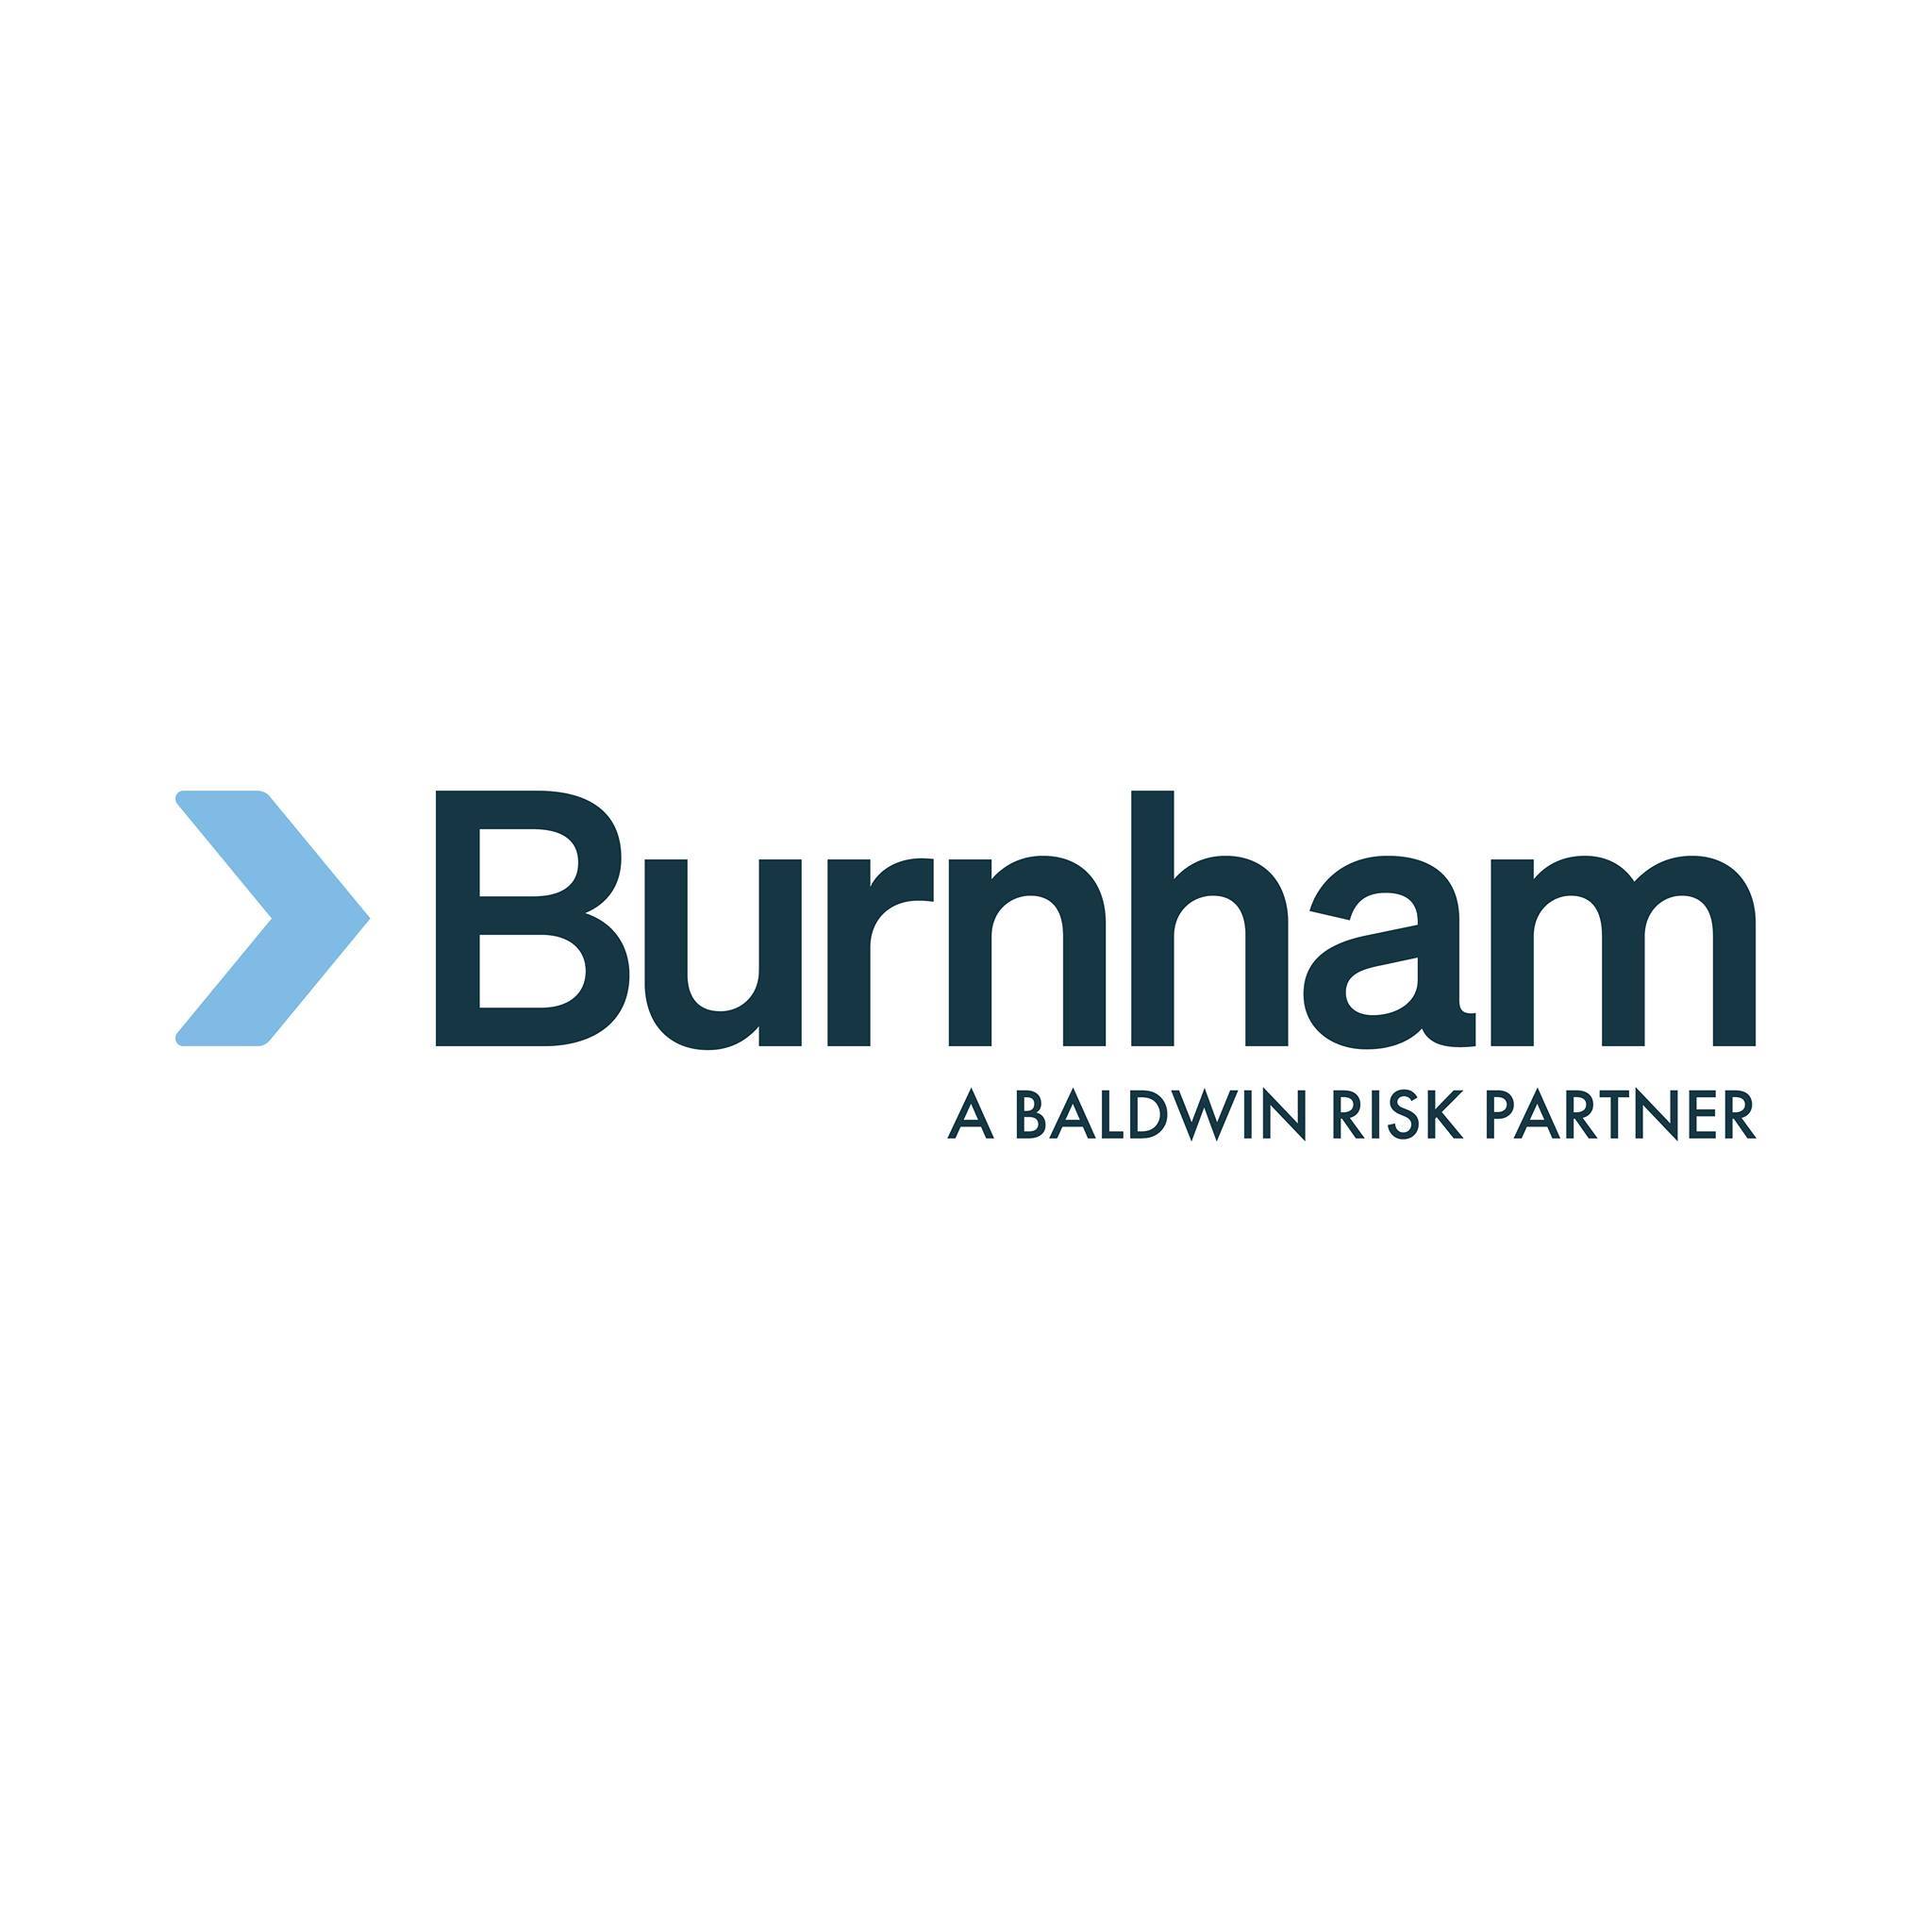 Burnham Benefits Insurance Services